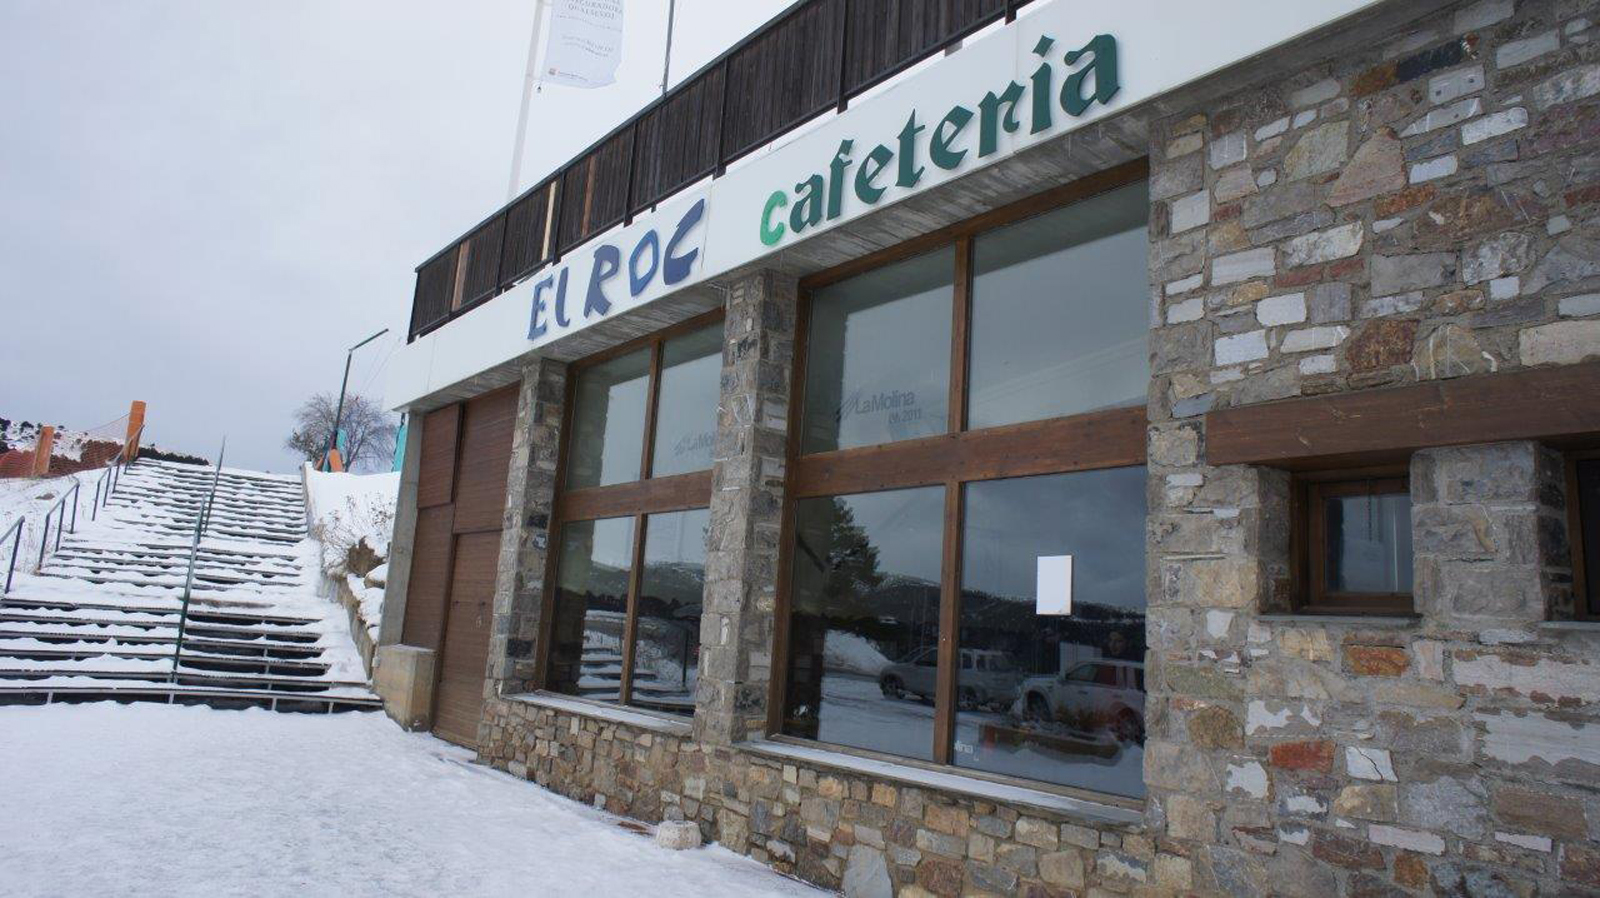 El Roc Restaurant - Cafeteria